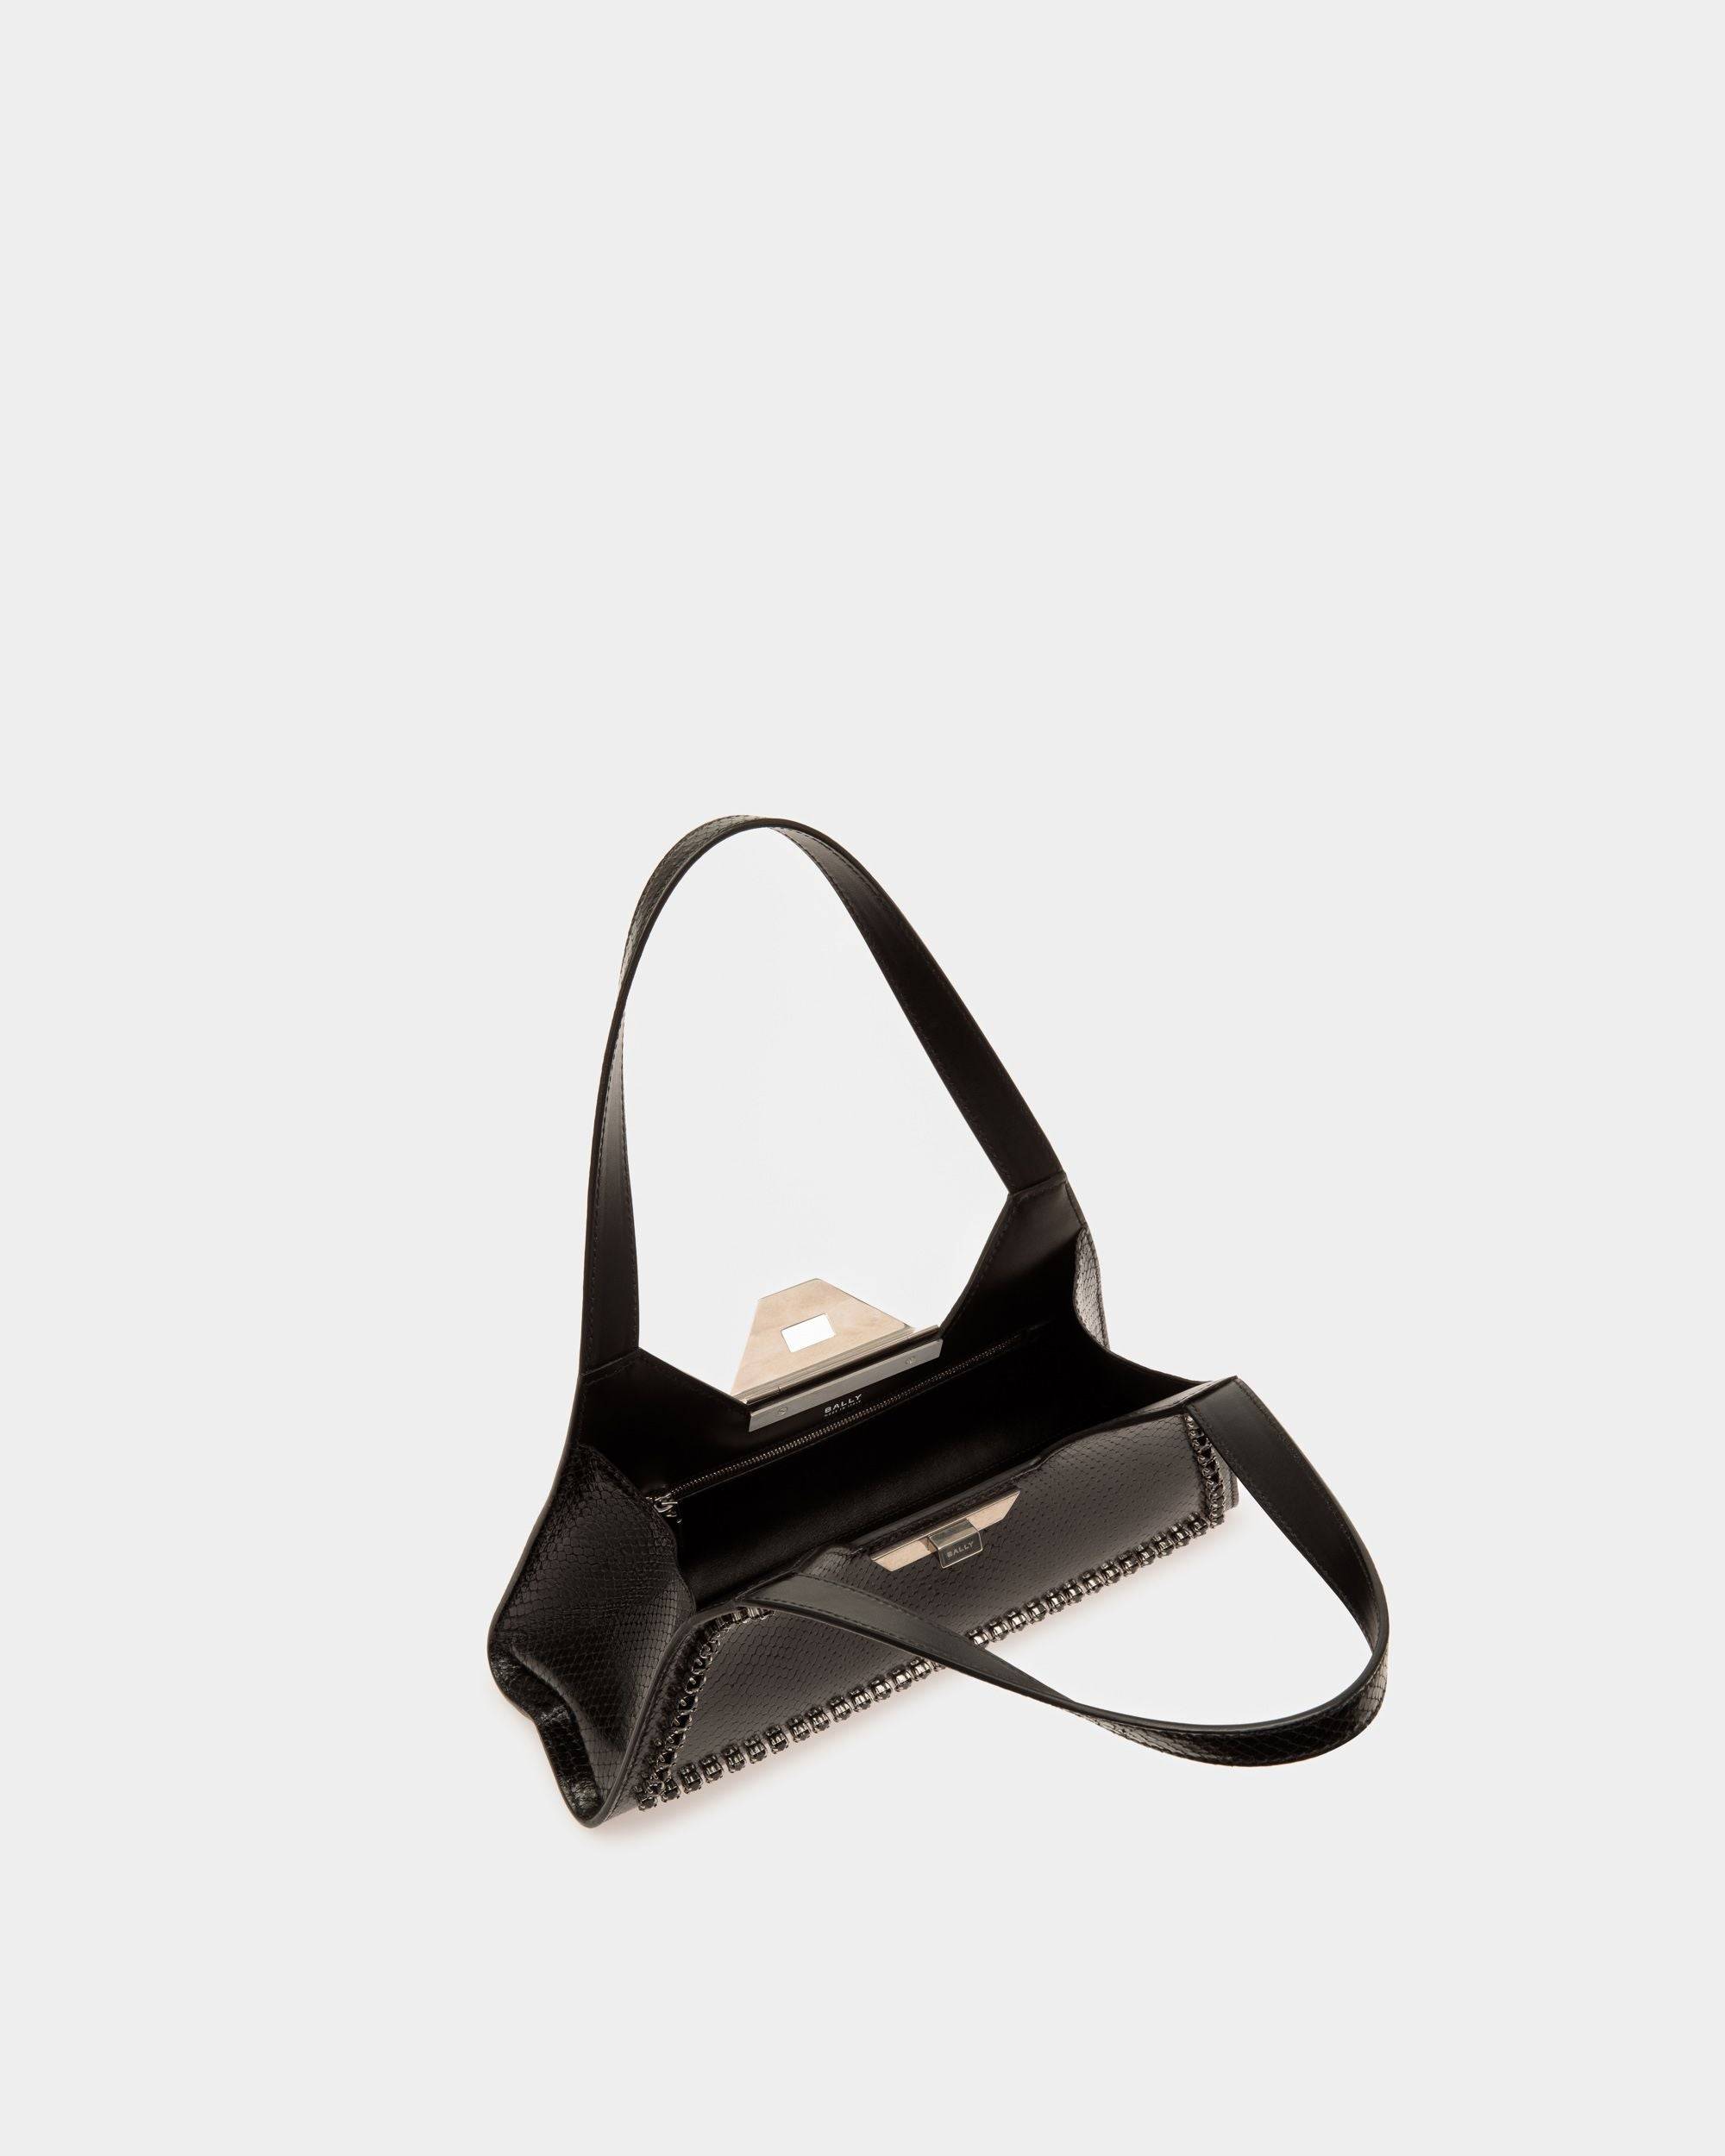 Tilt | Women's Small Shoulder Bag in Black Python Printed Leather | Bally | Still Life Open / Inside